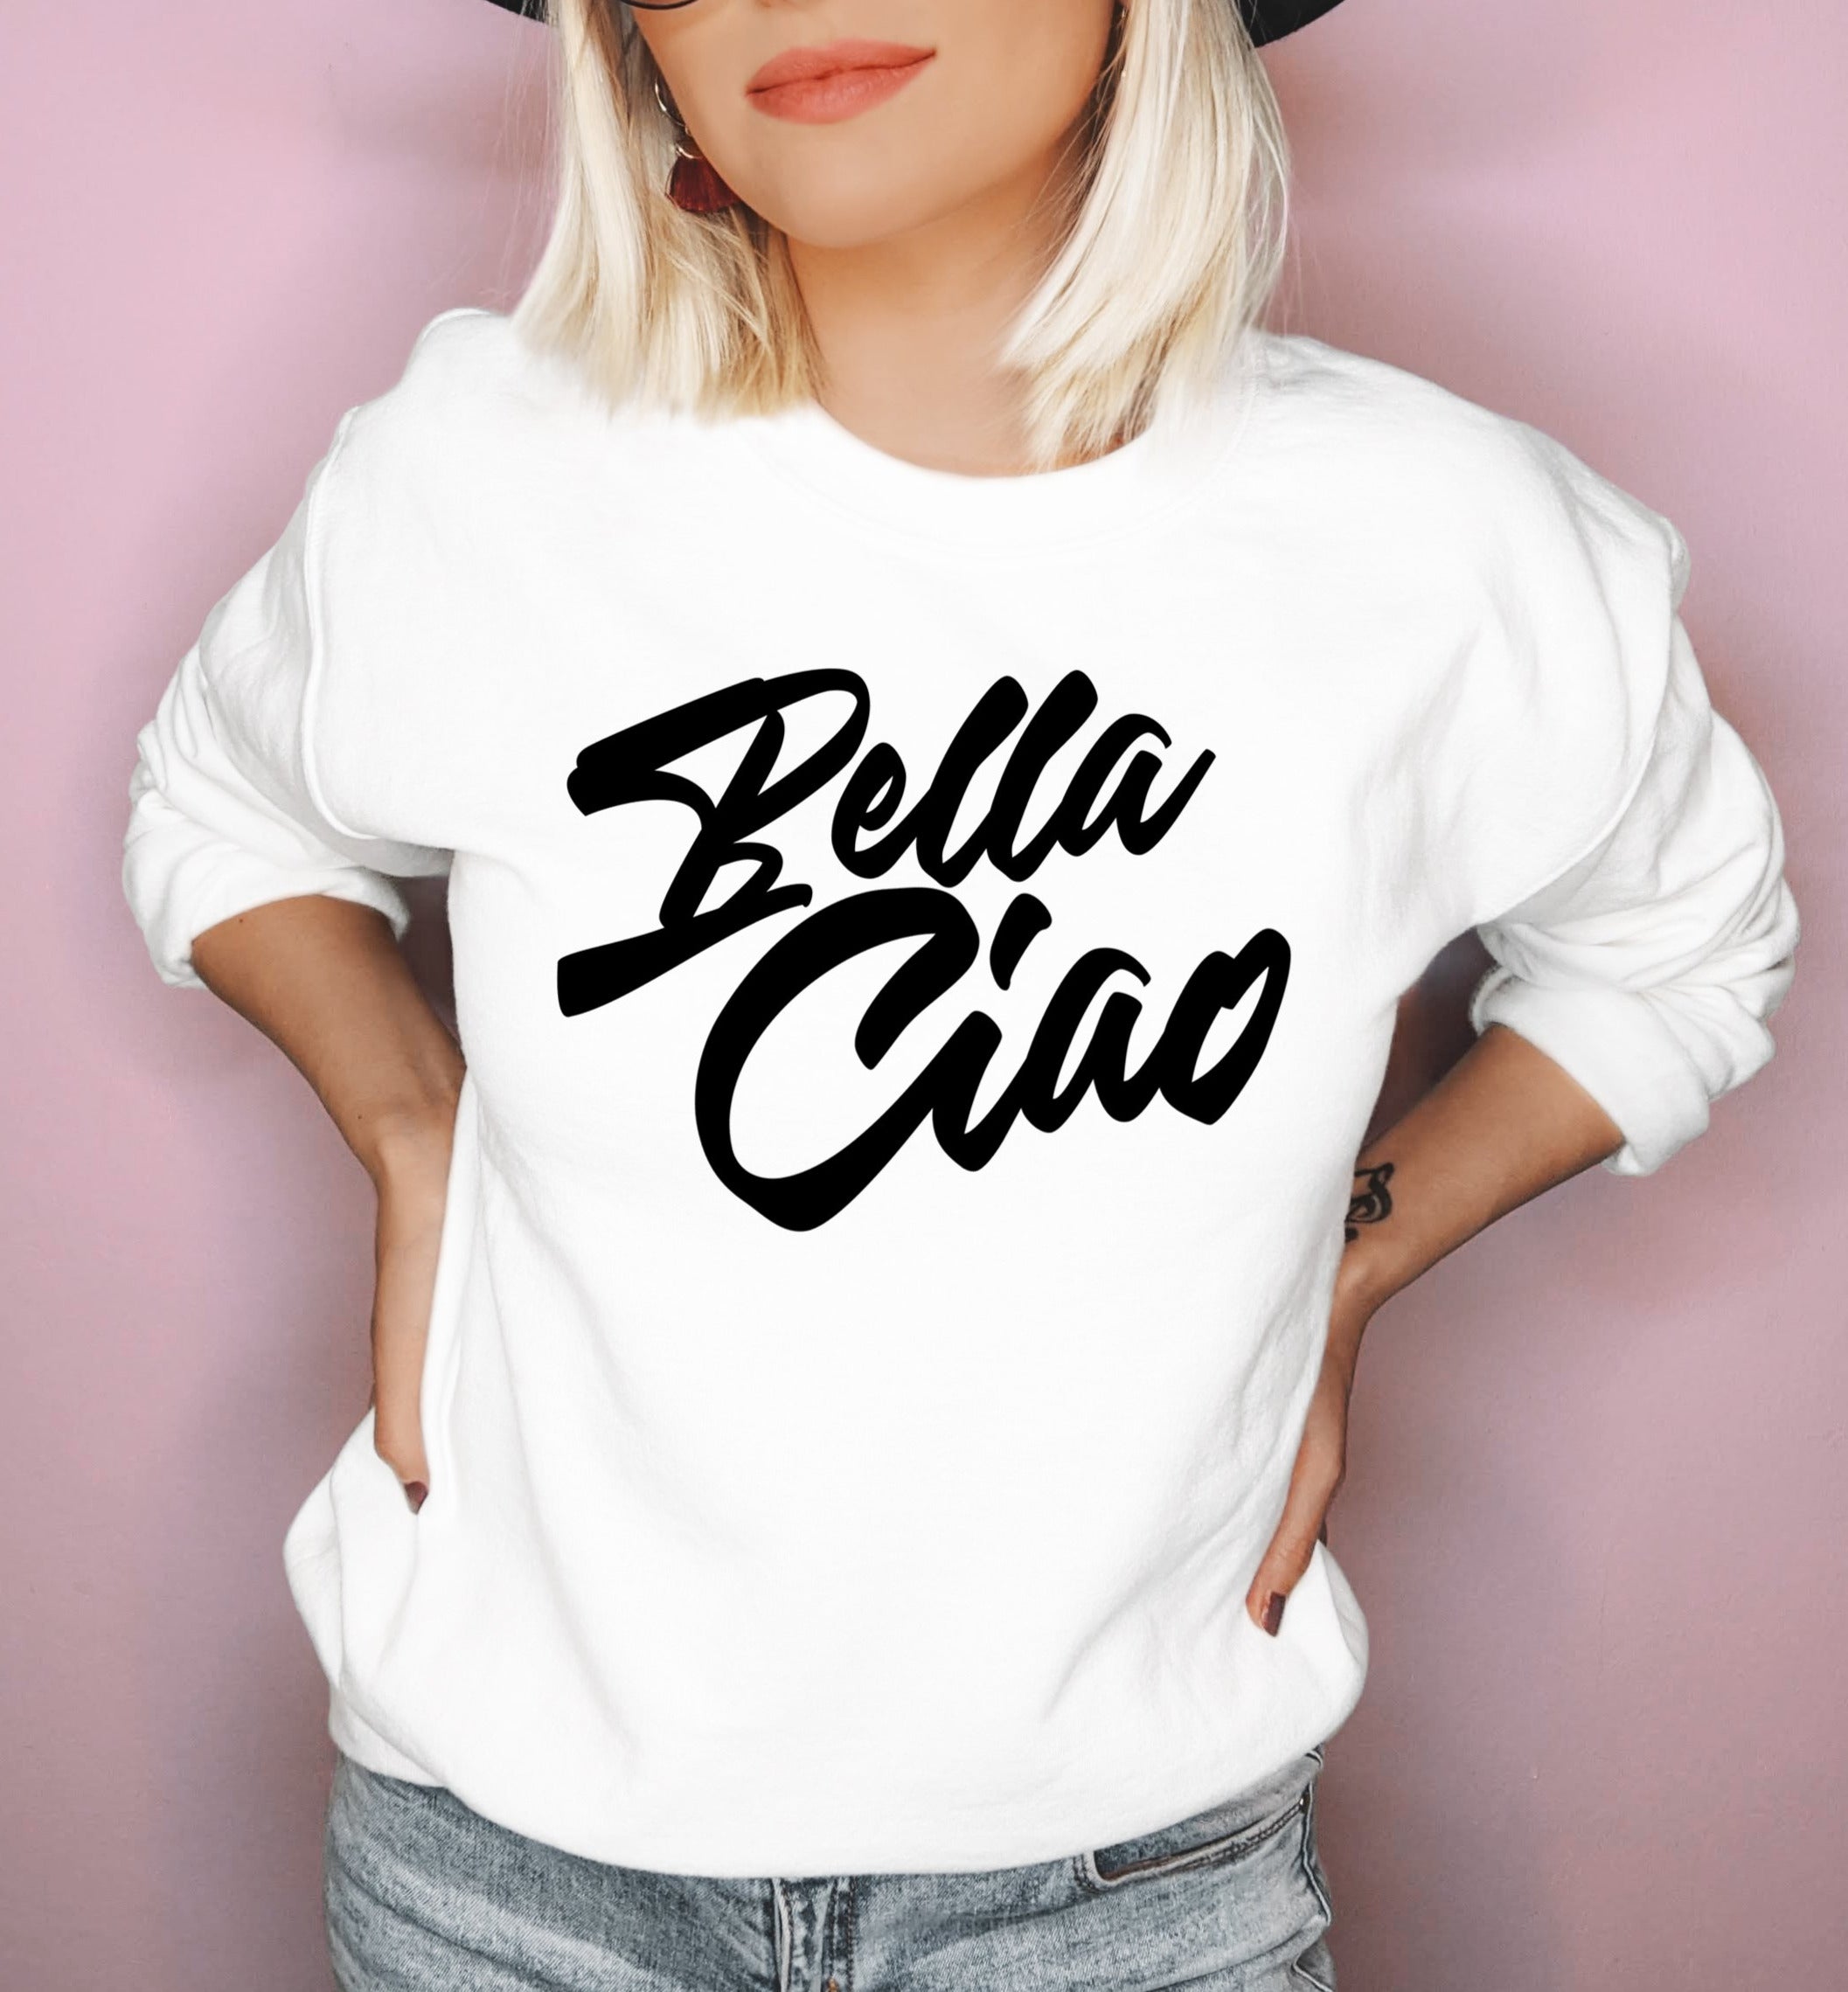 White sweatshirt saying bella ciao